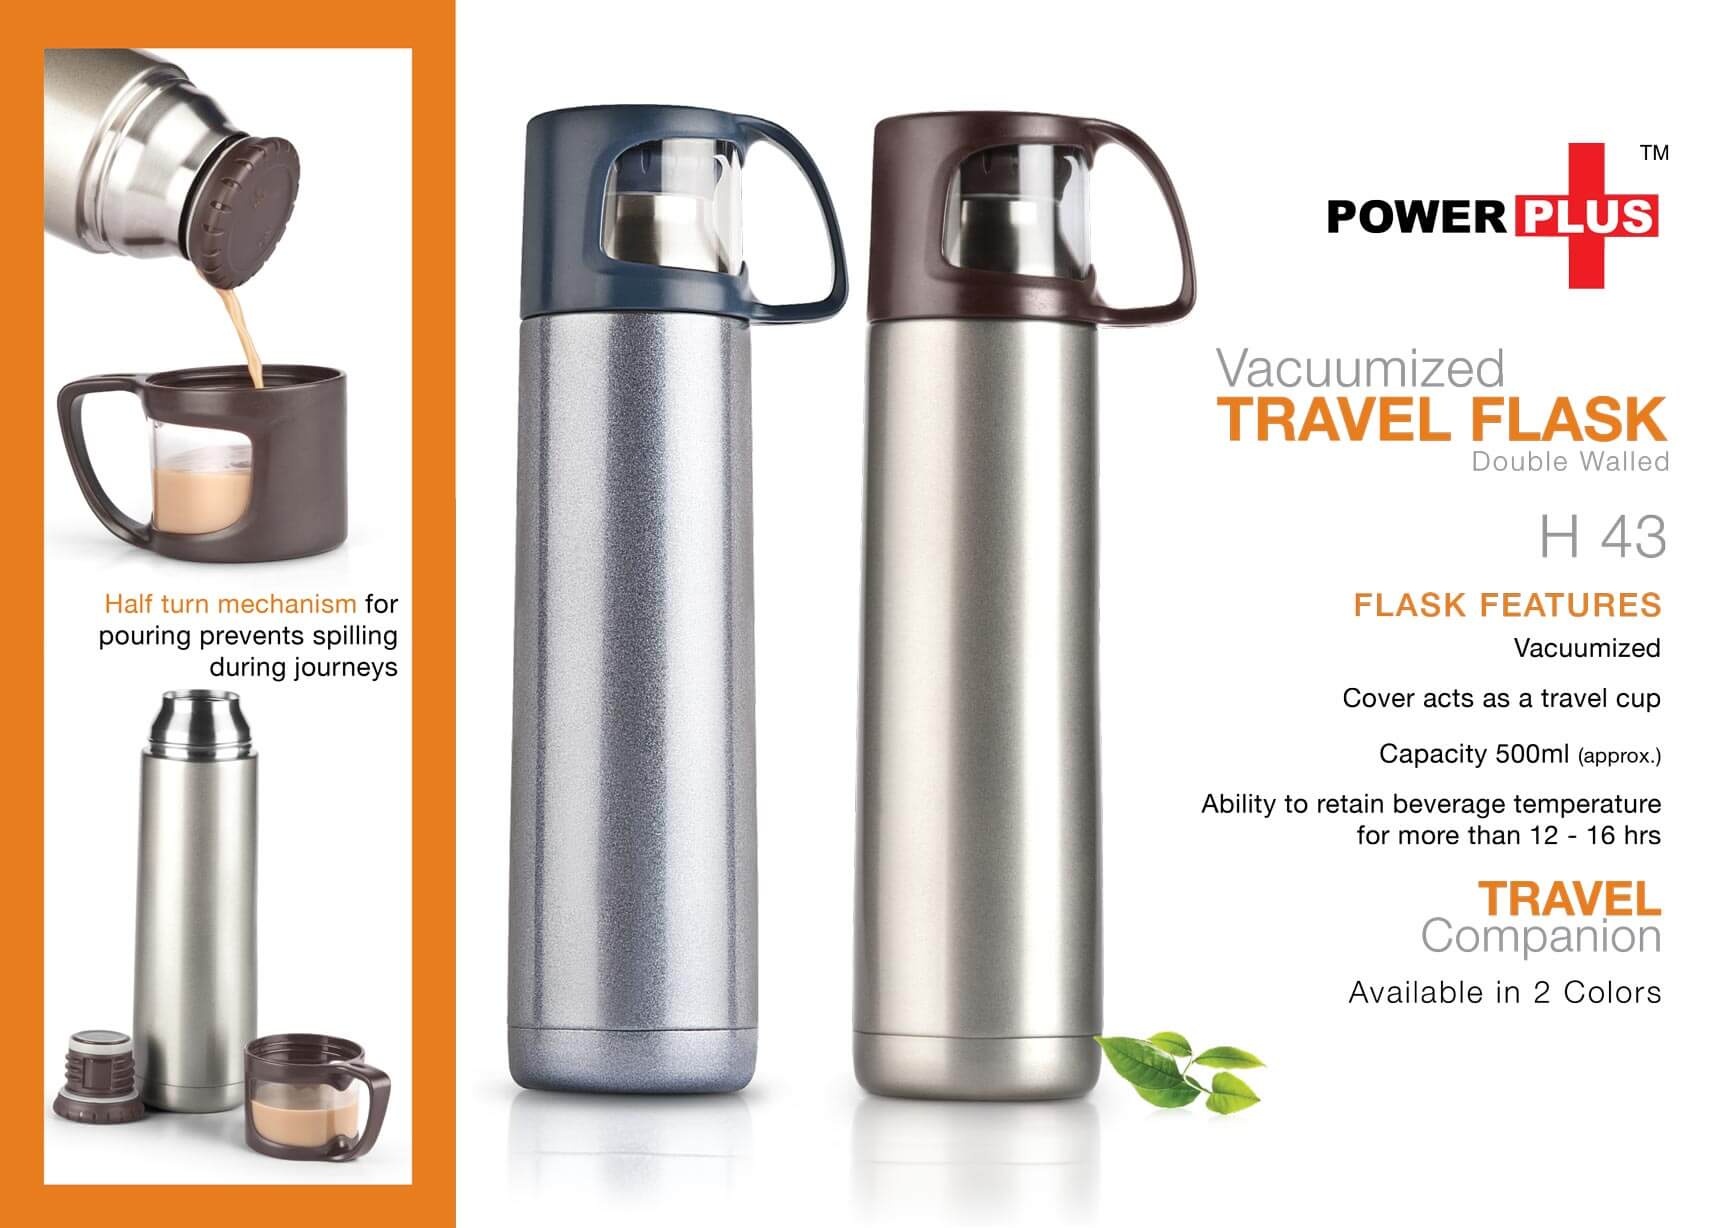 Power plus vaccumized travel flasl(500 ml approx)